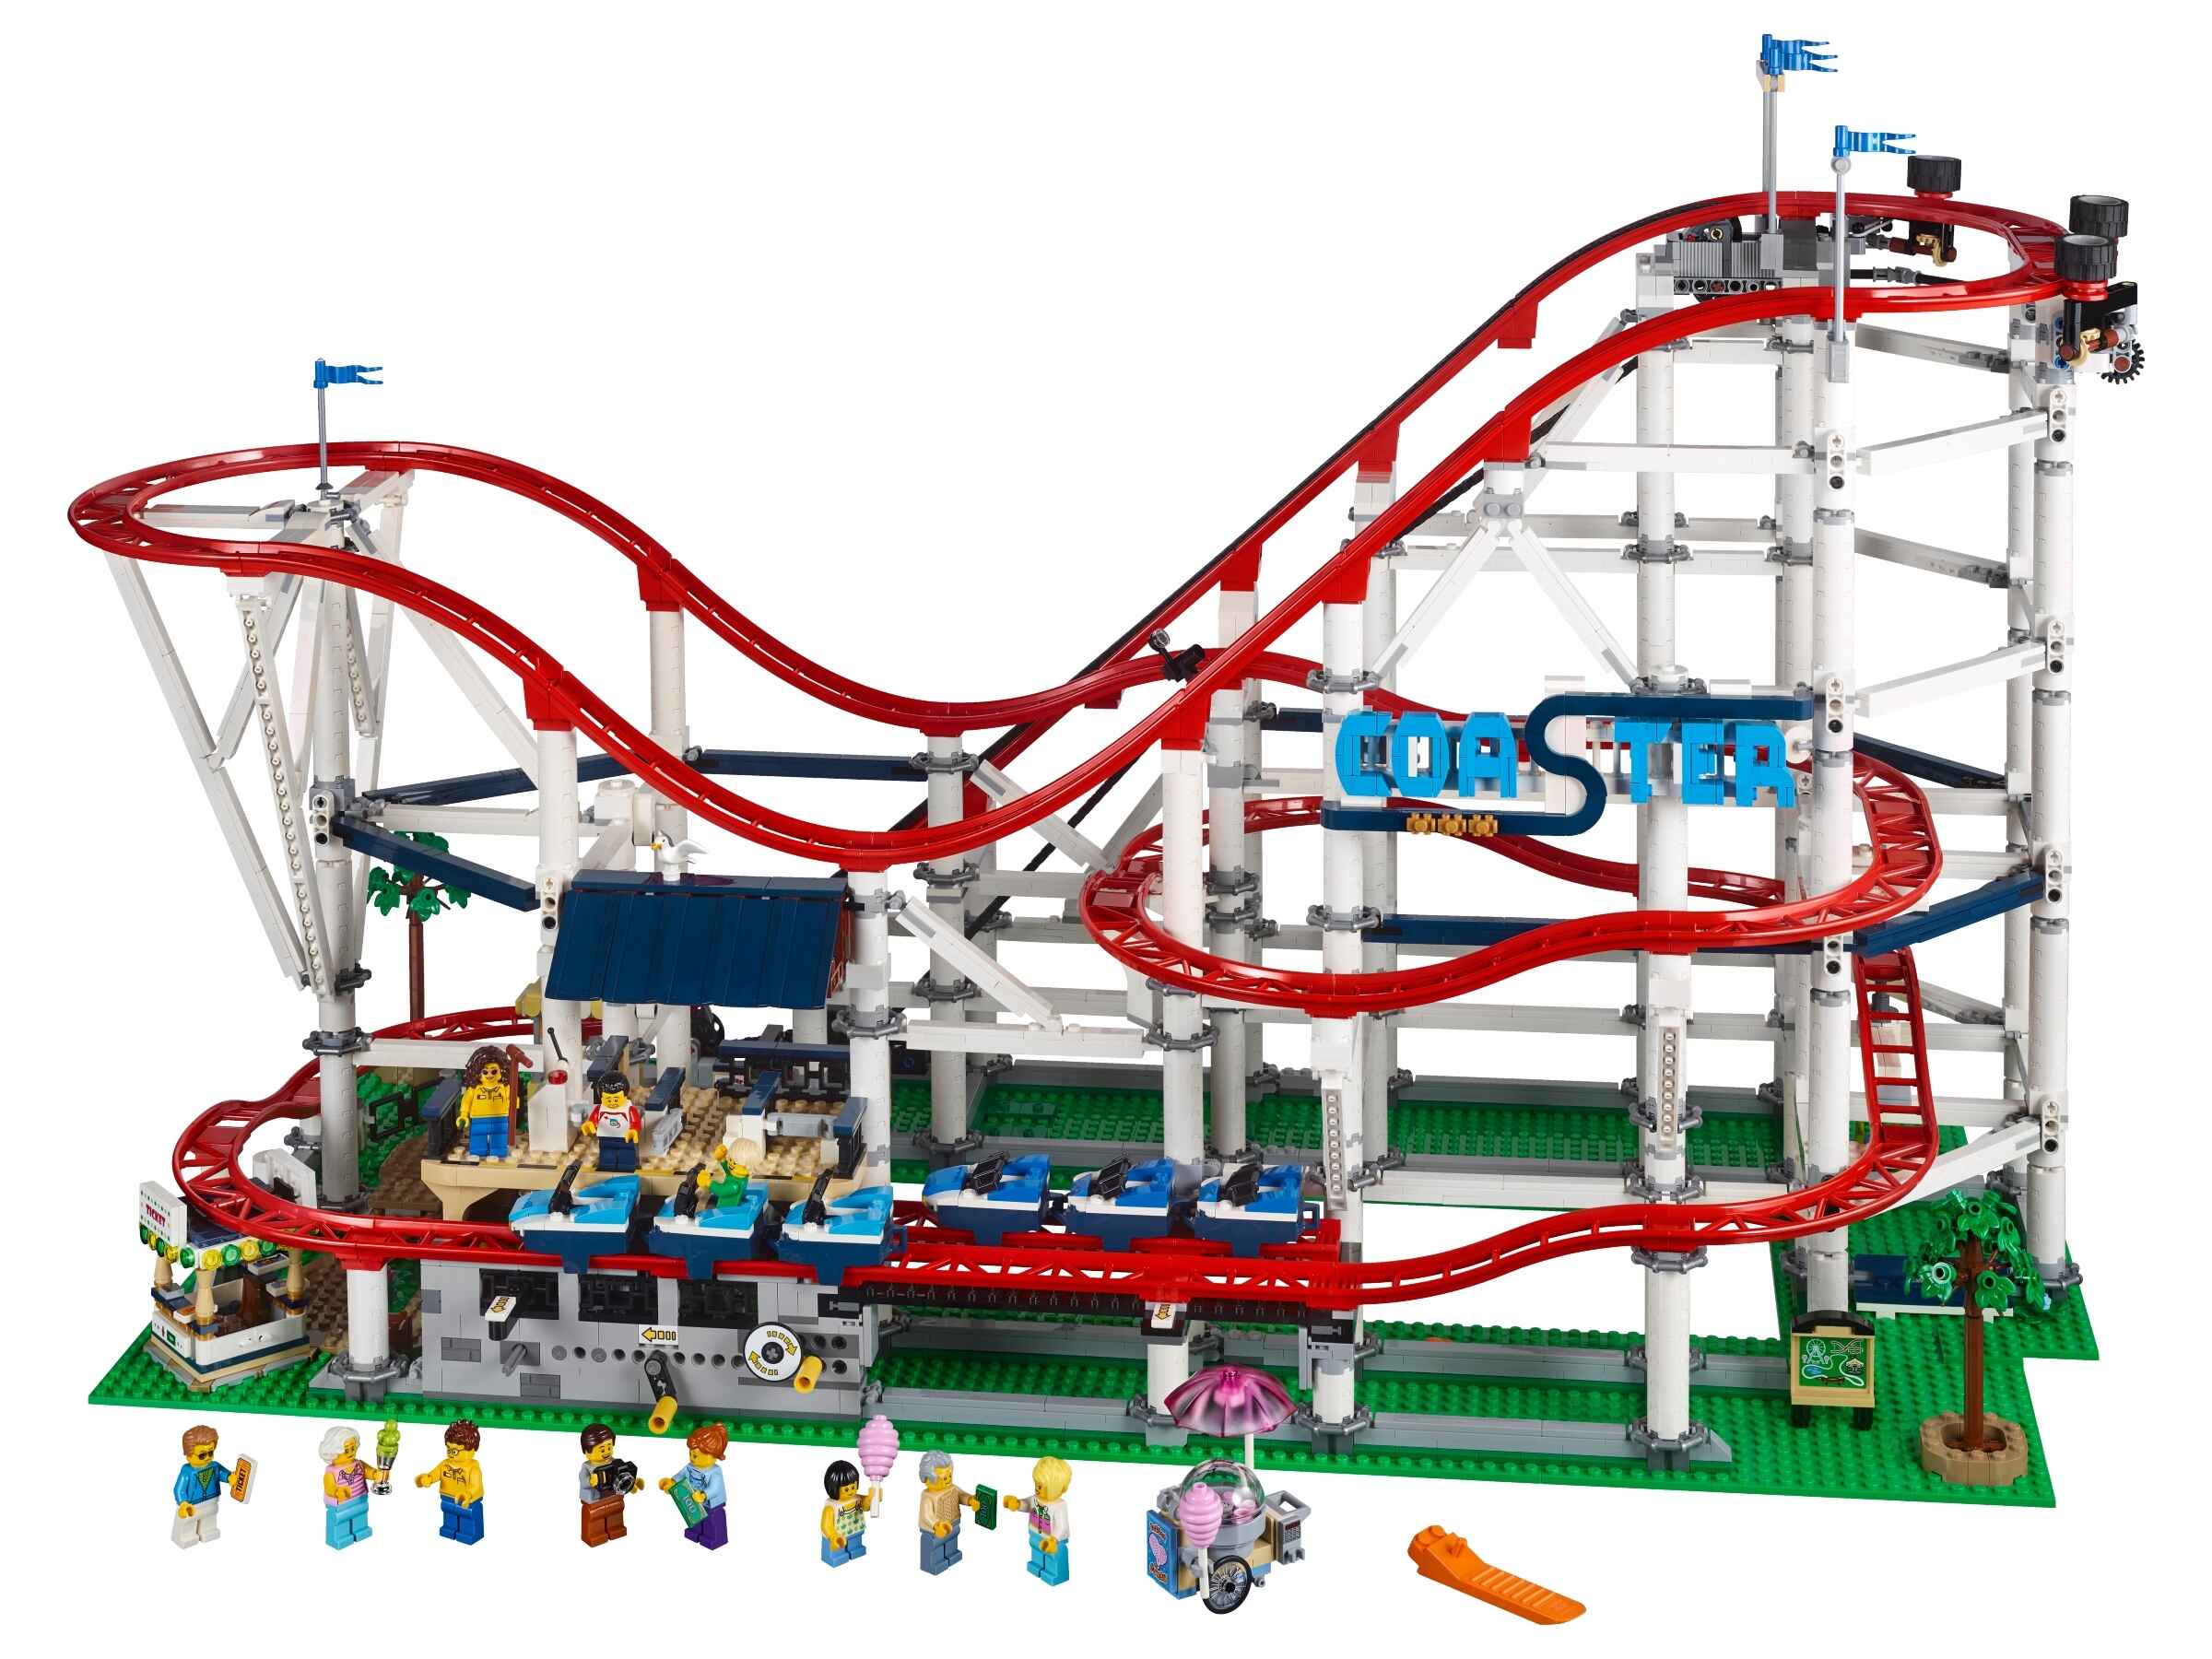 LEGO 10261 Achterbahn